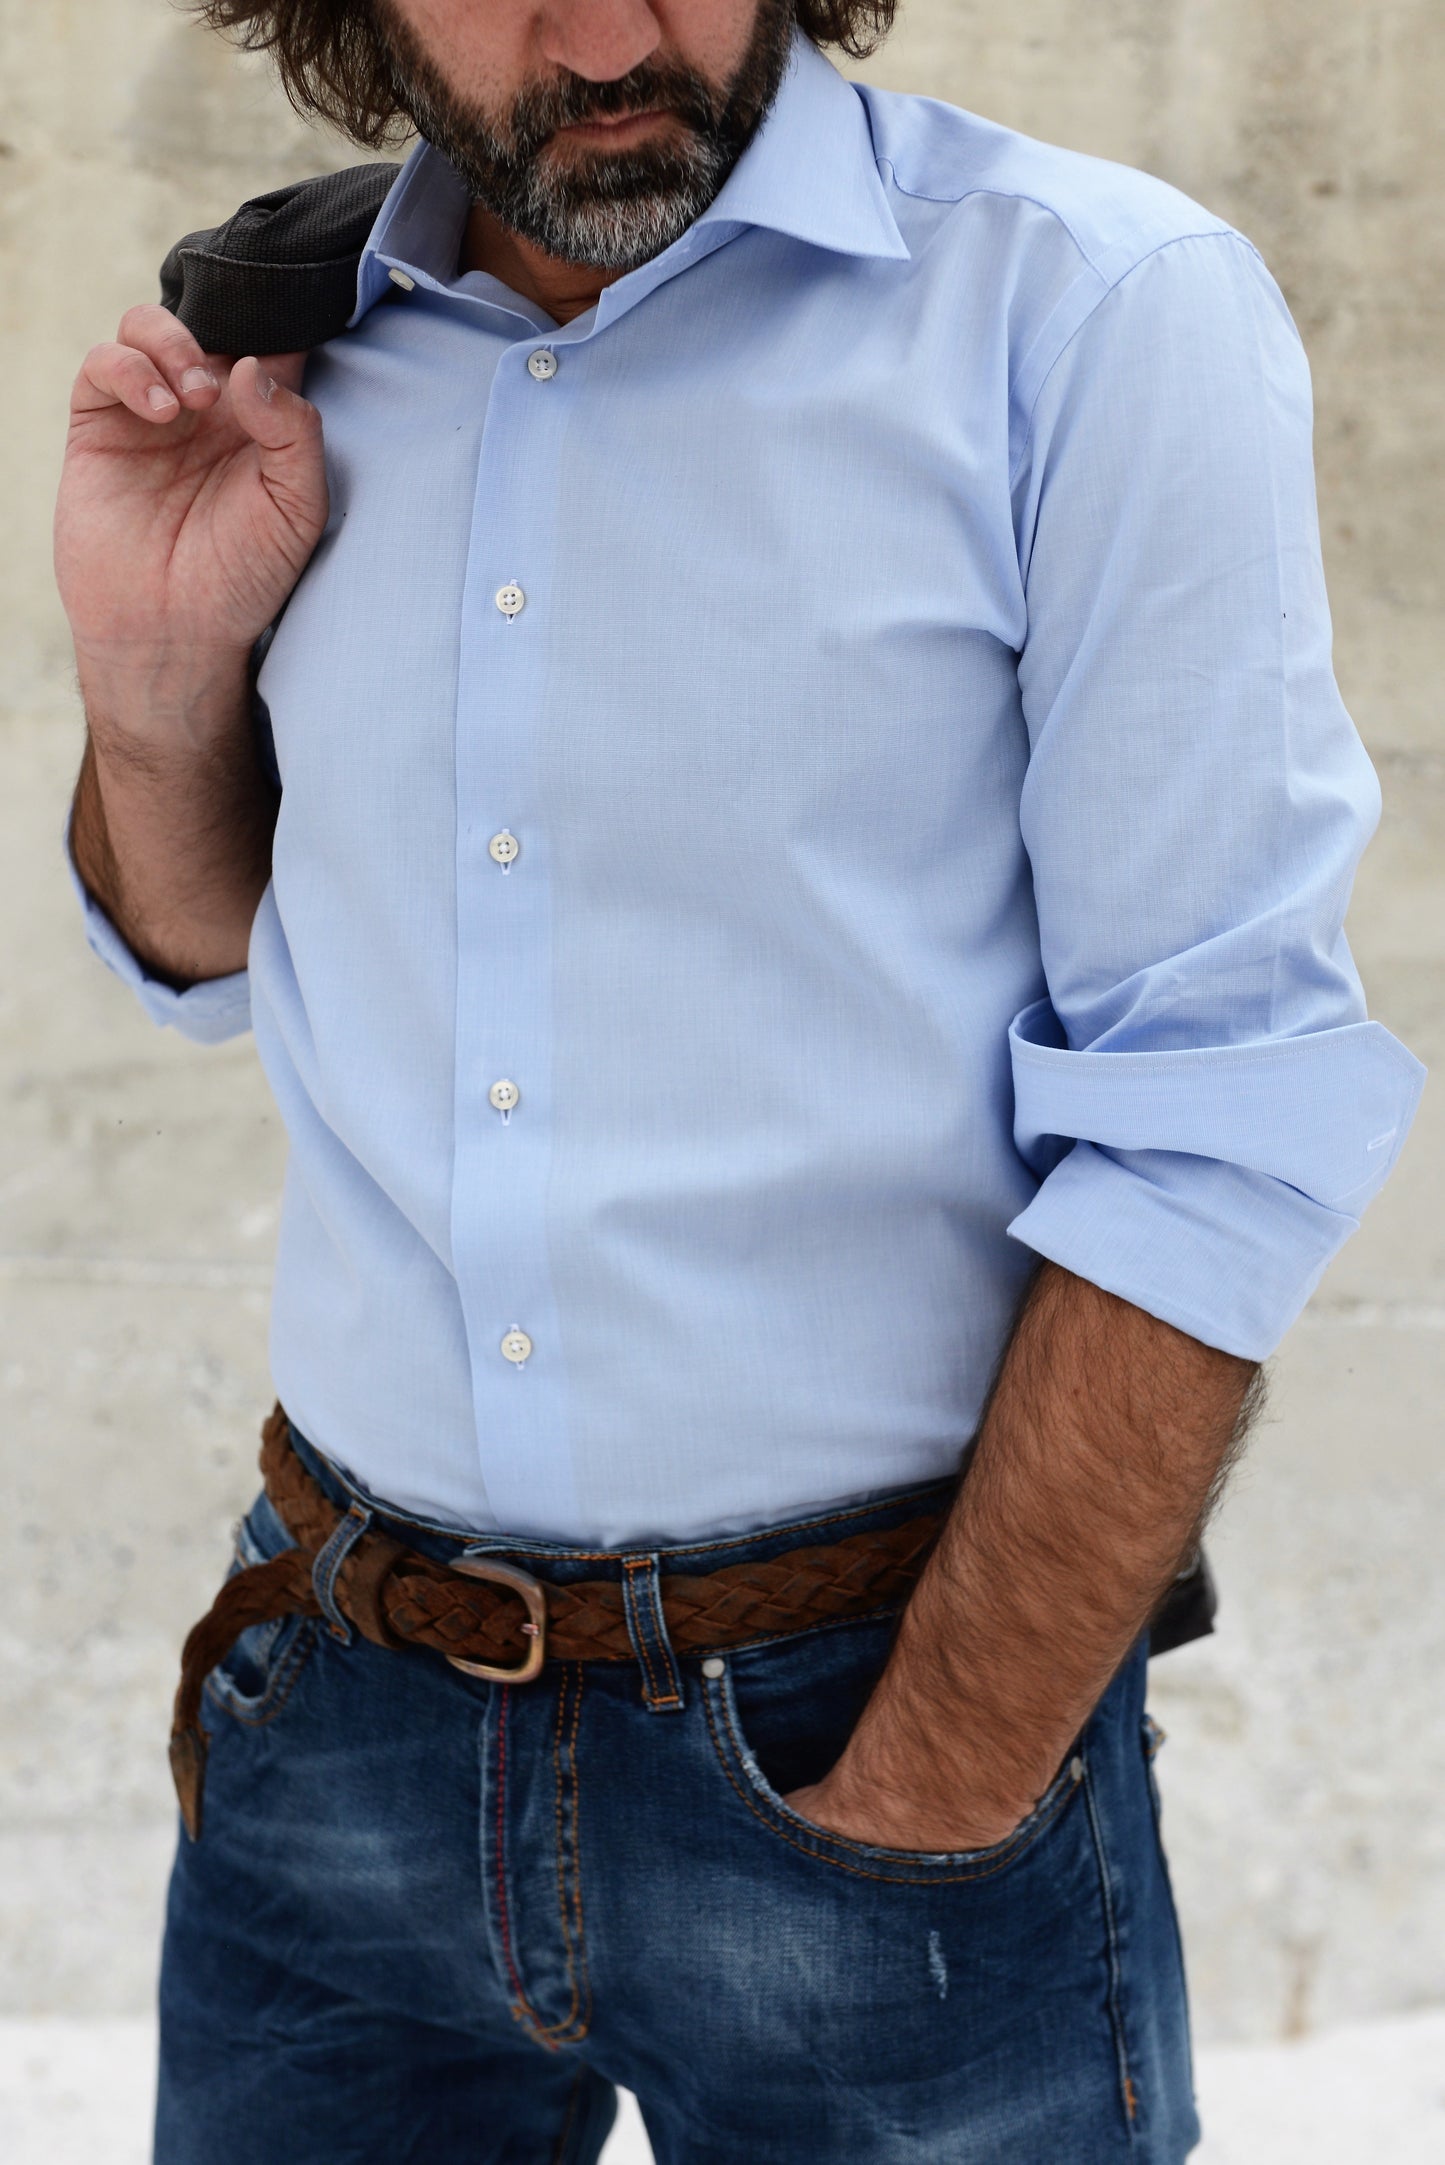 Men's shirt with light blue spread collar